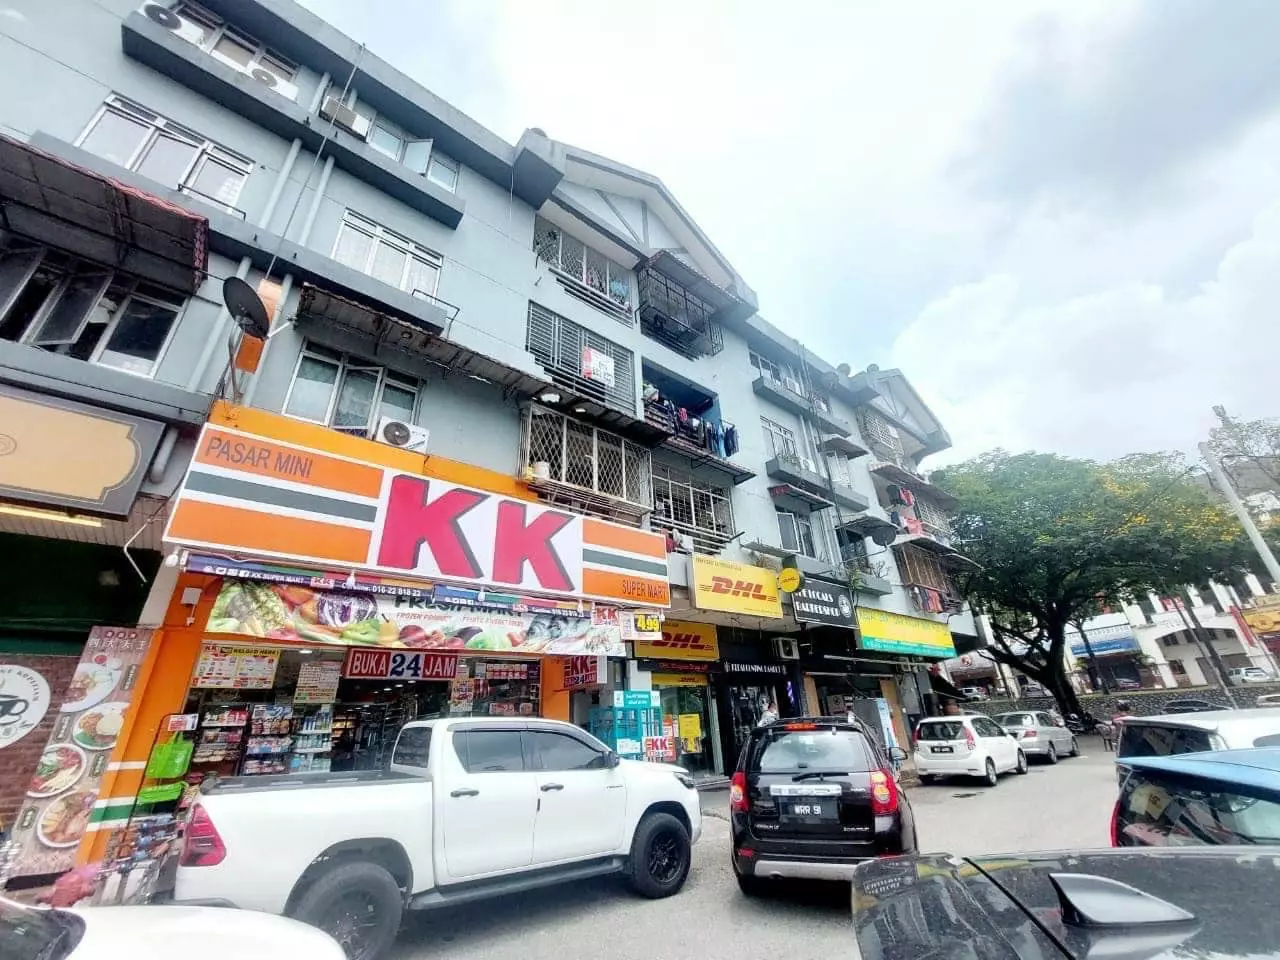 Rumah Lelong Kuchai Entrepreneurs Park @ Kuchai Lama, Kuala Lumpur for Auction